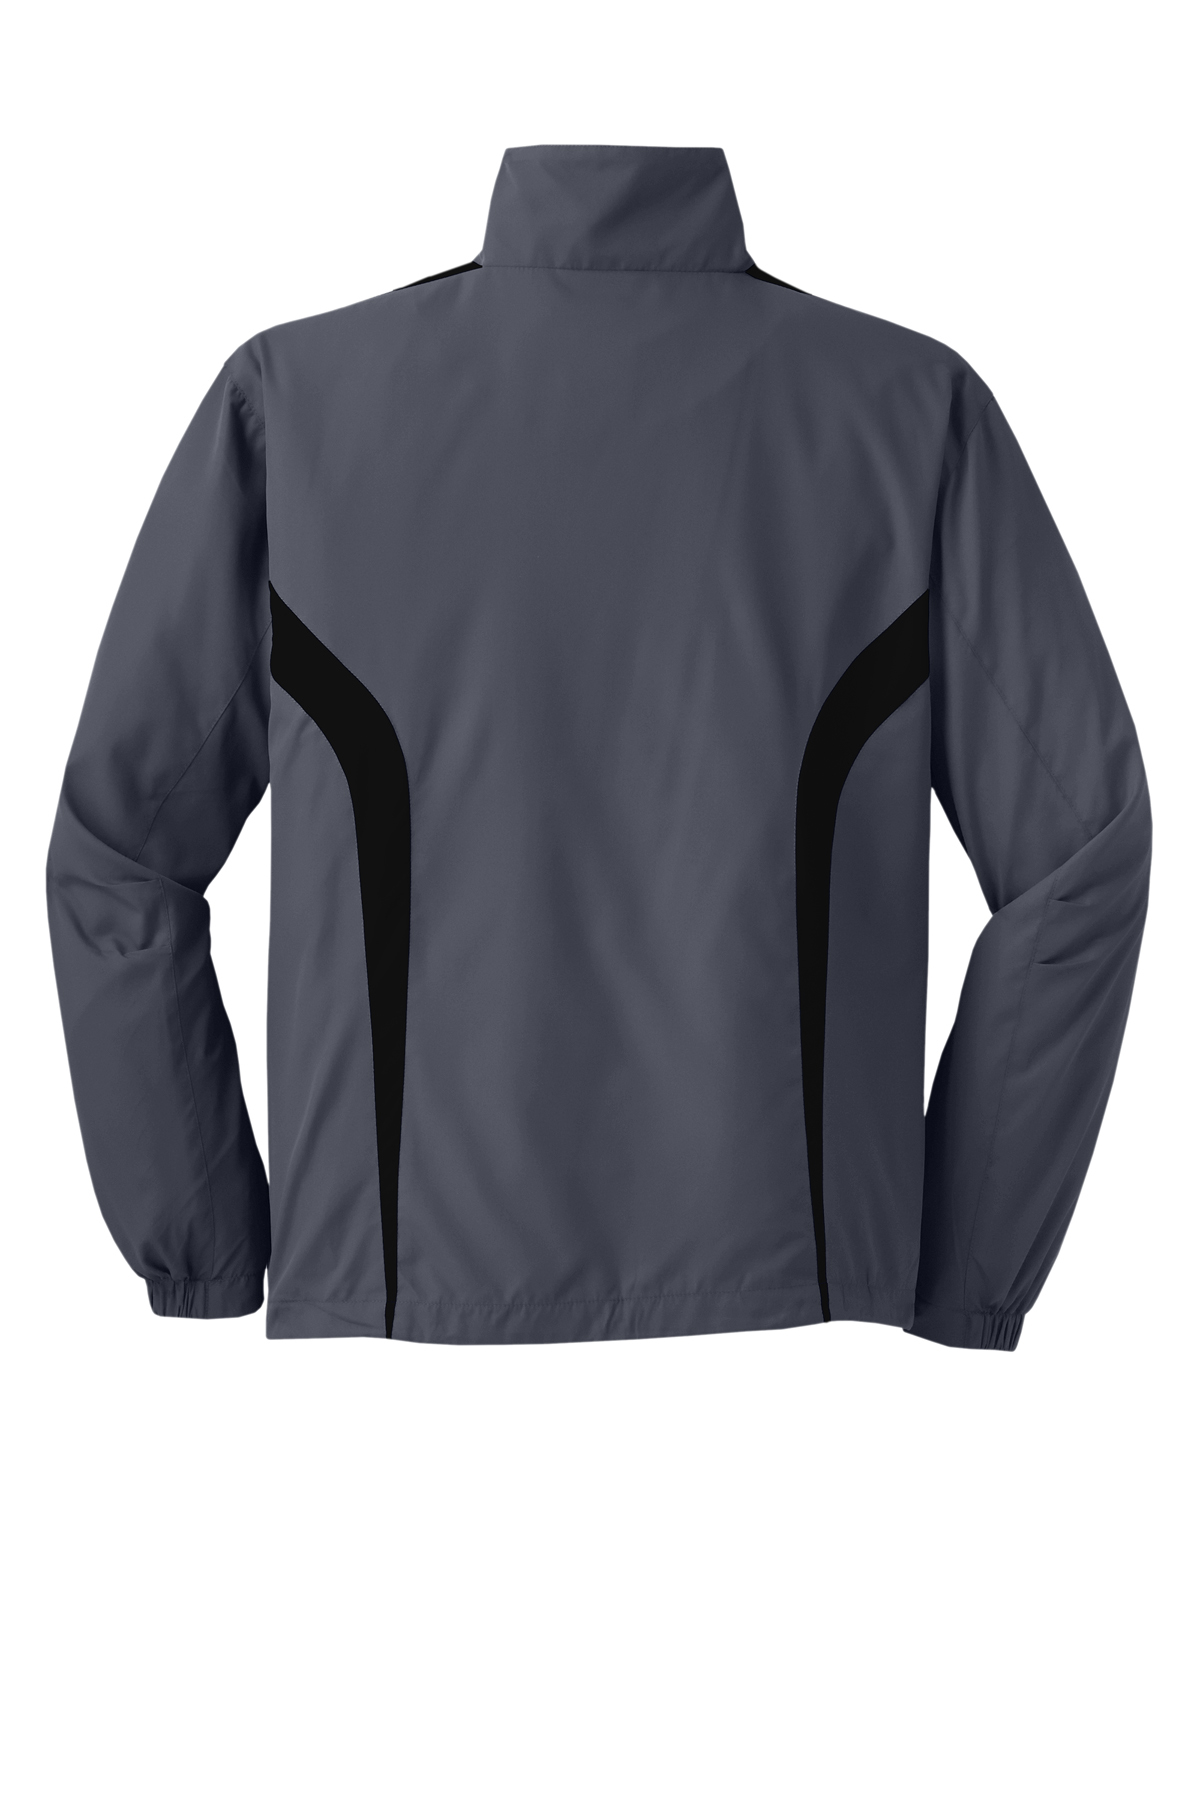 Sport-Tek Colorblock Raglan Jacket | Product | SanMar